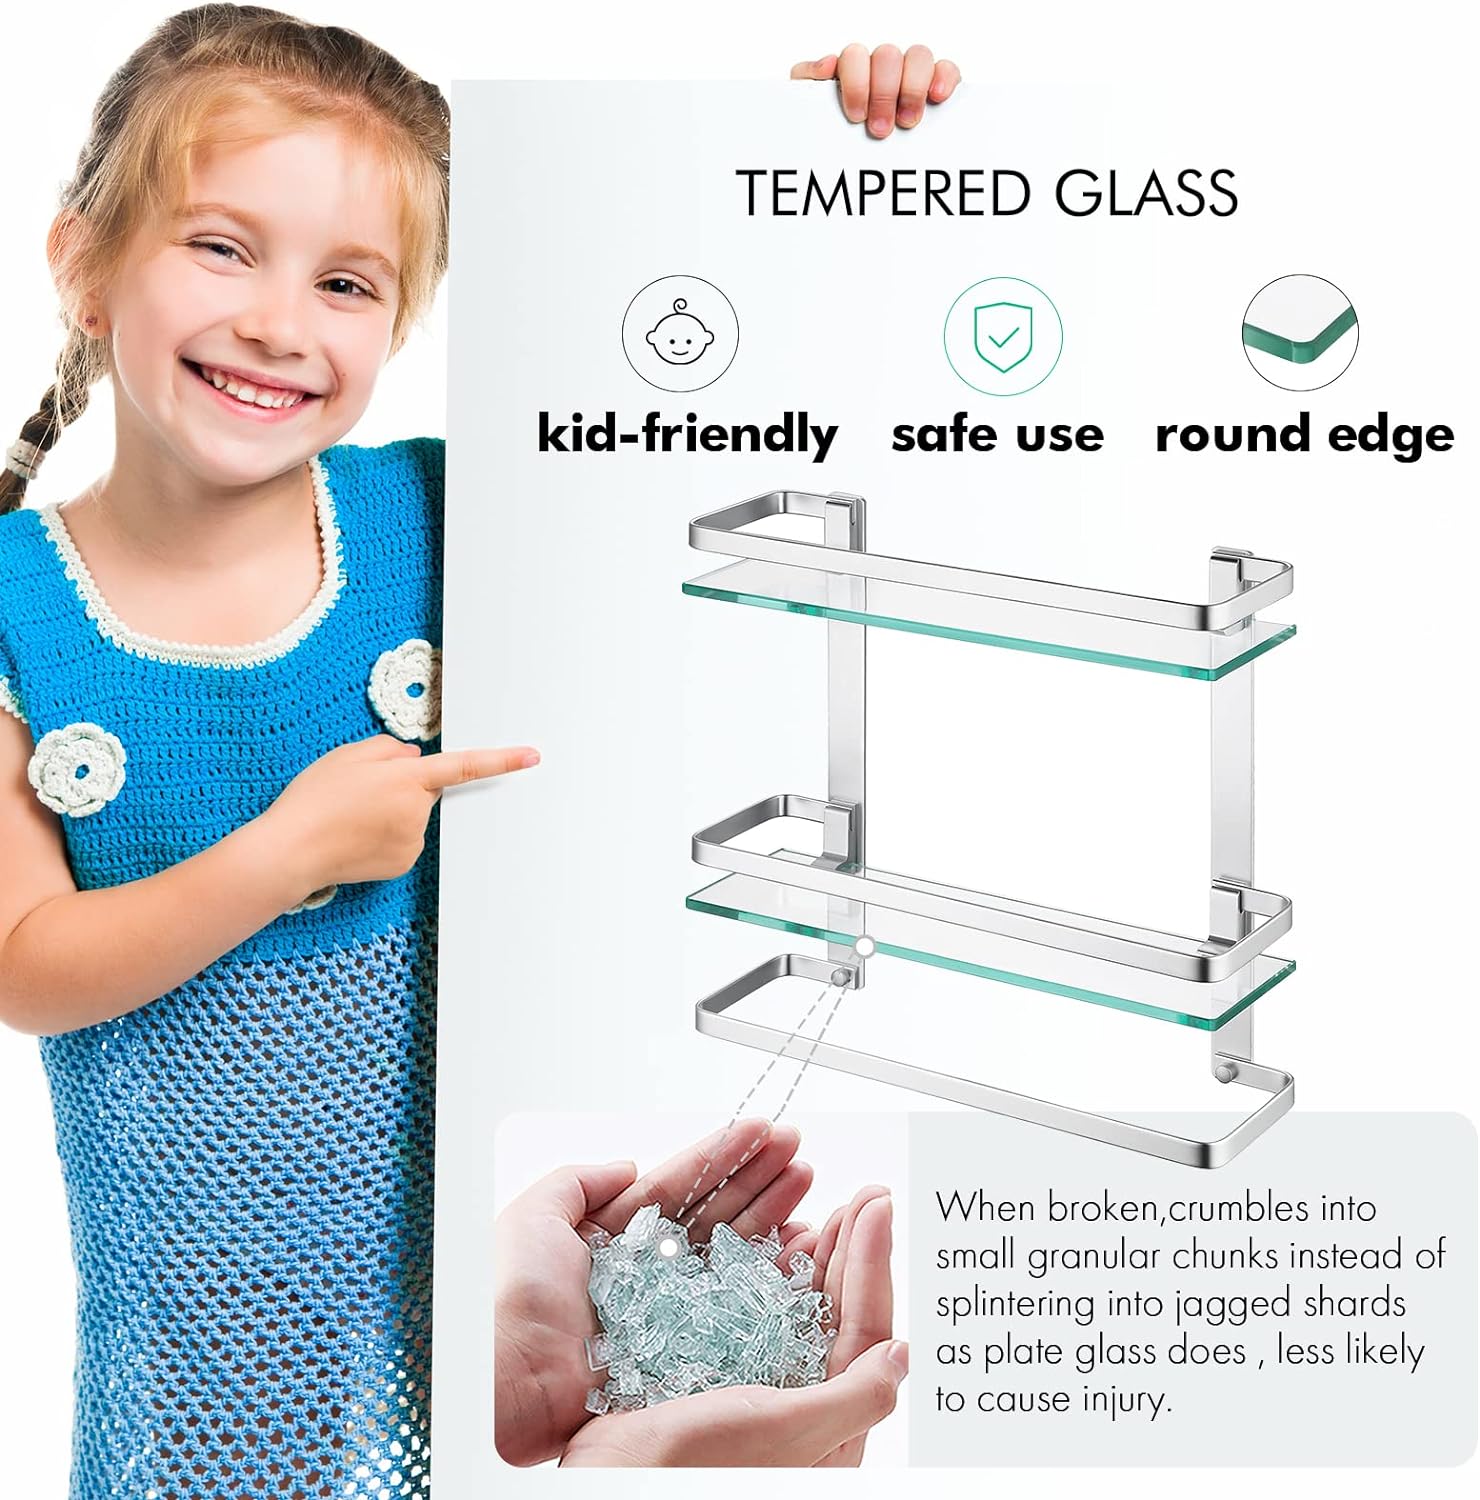 KES Bathroom Tempered Glass Shelf 2 Tier Storage Glass Shelf Rectangular with Towel Bar Wall Mounted Sand Sprayed Anodized Aluminum